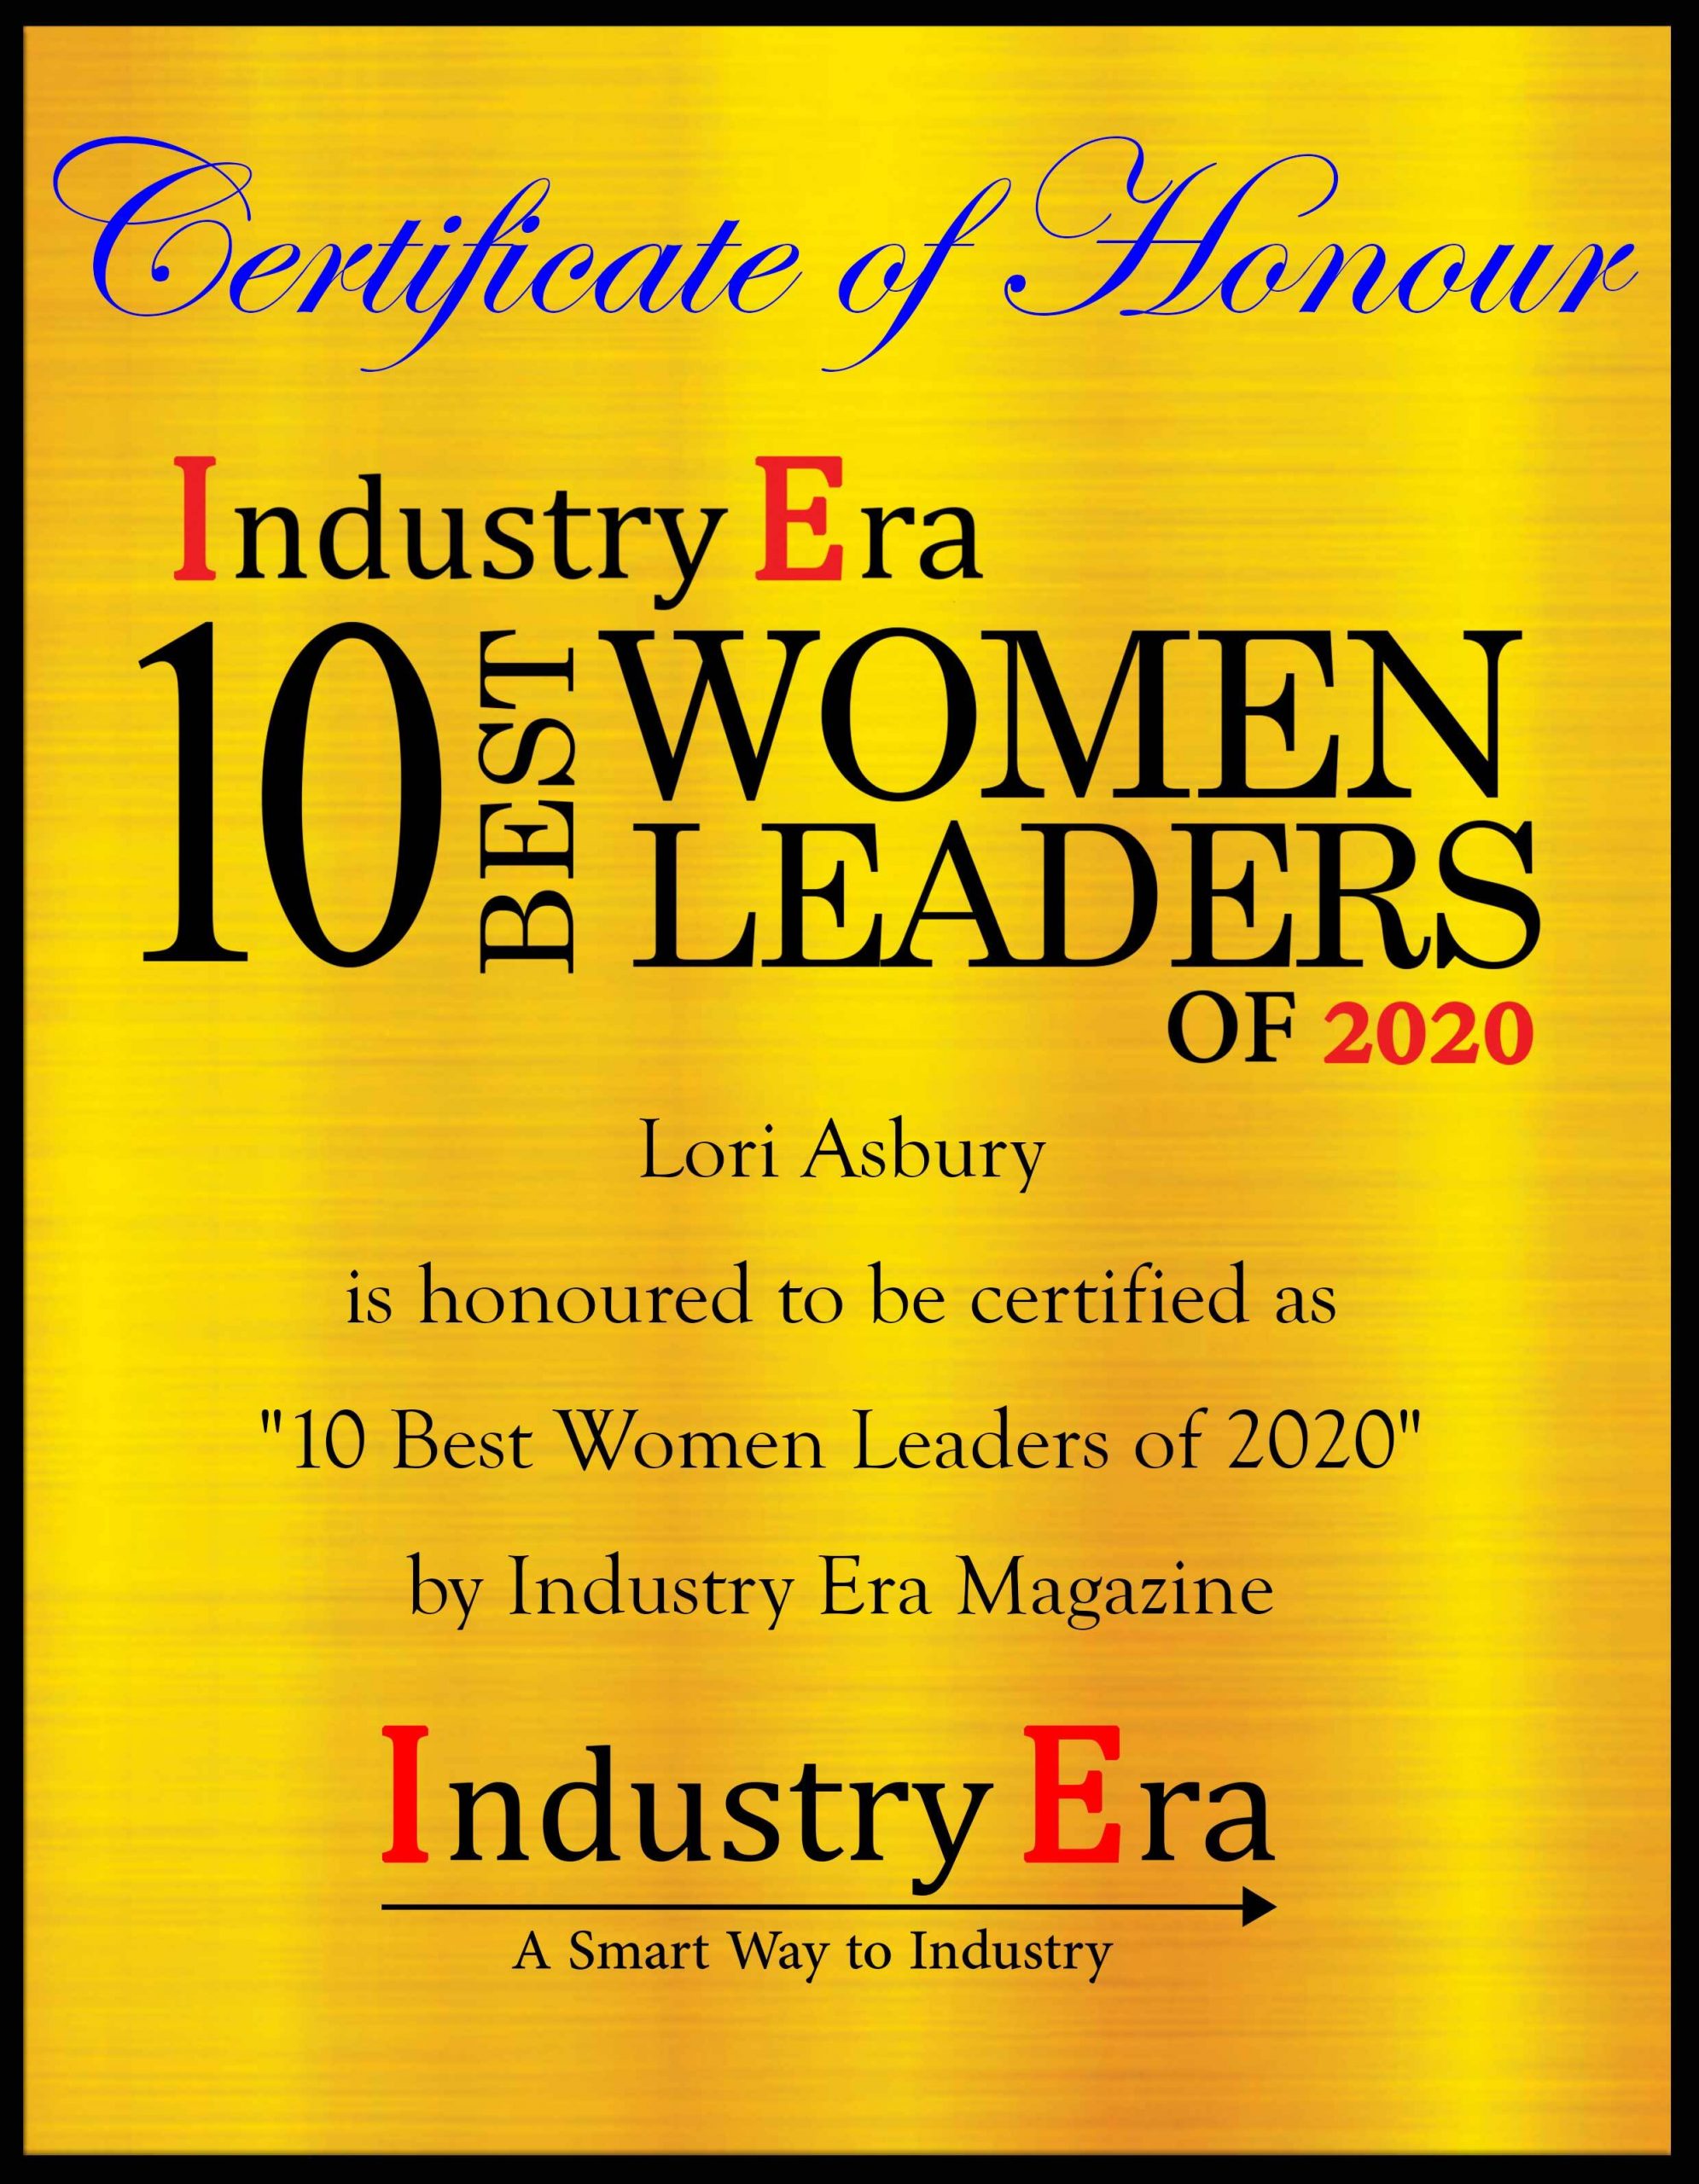 Certificate of honour from IndustryEra.